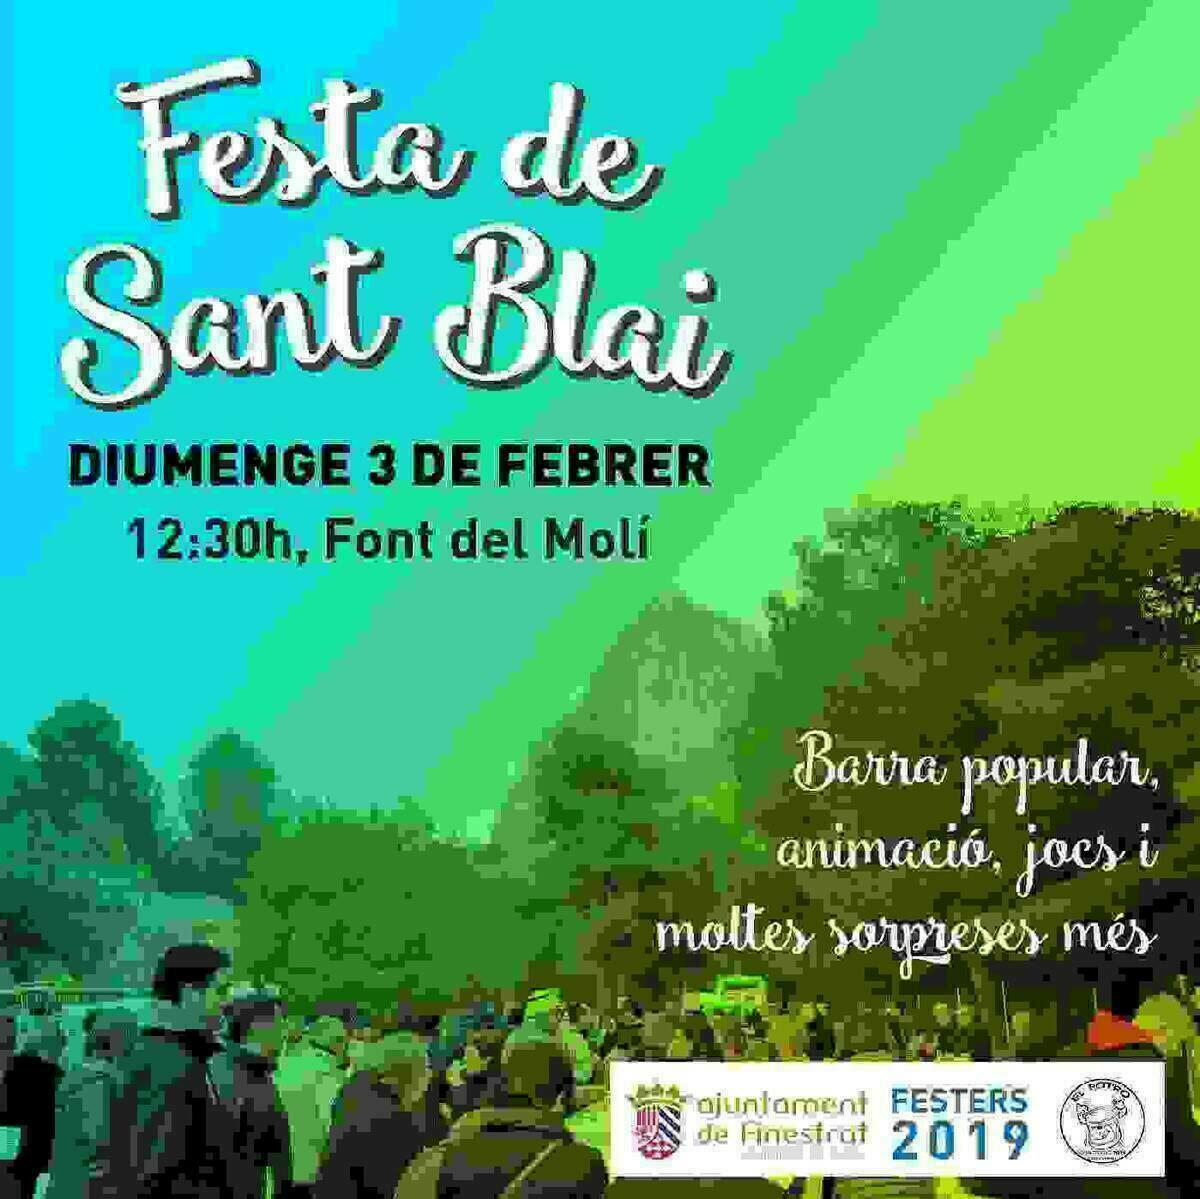 Finestrat celebra este domingo la tradicional festividad de Sant Blai en la Font del Molí 